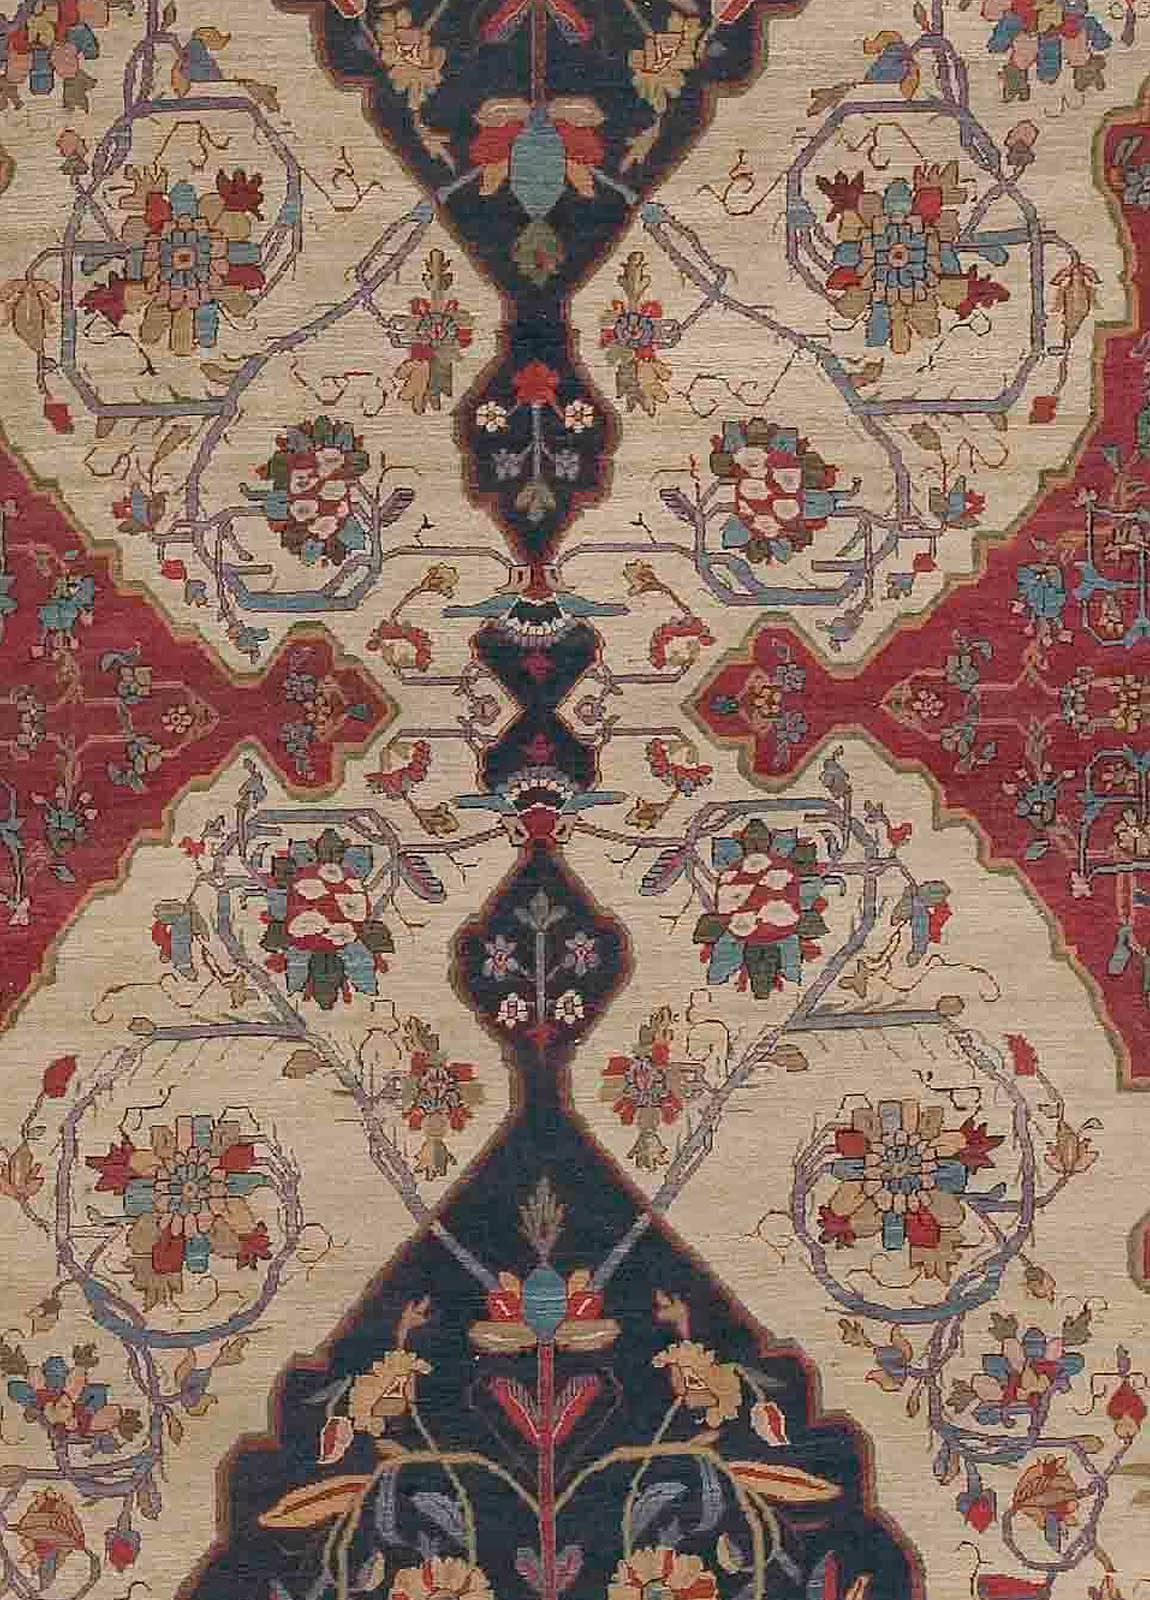 Oversized 19th Century Persian Kirman rug
Size: 15'4